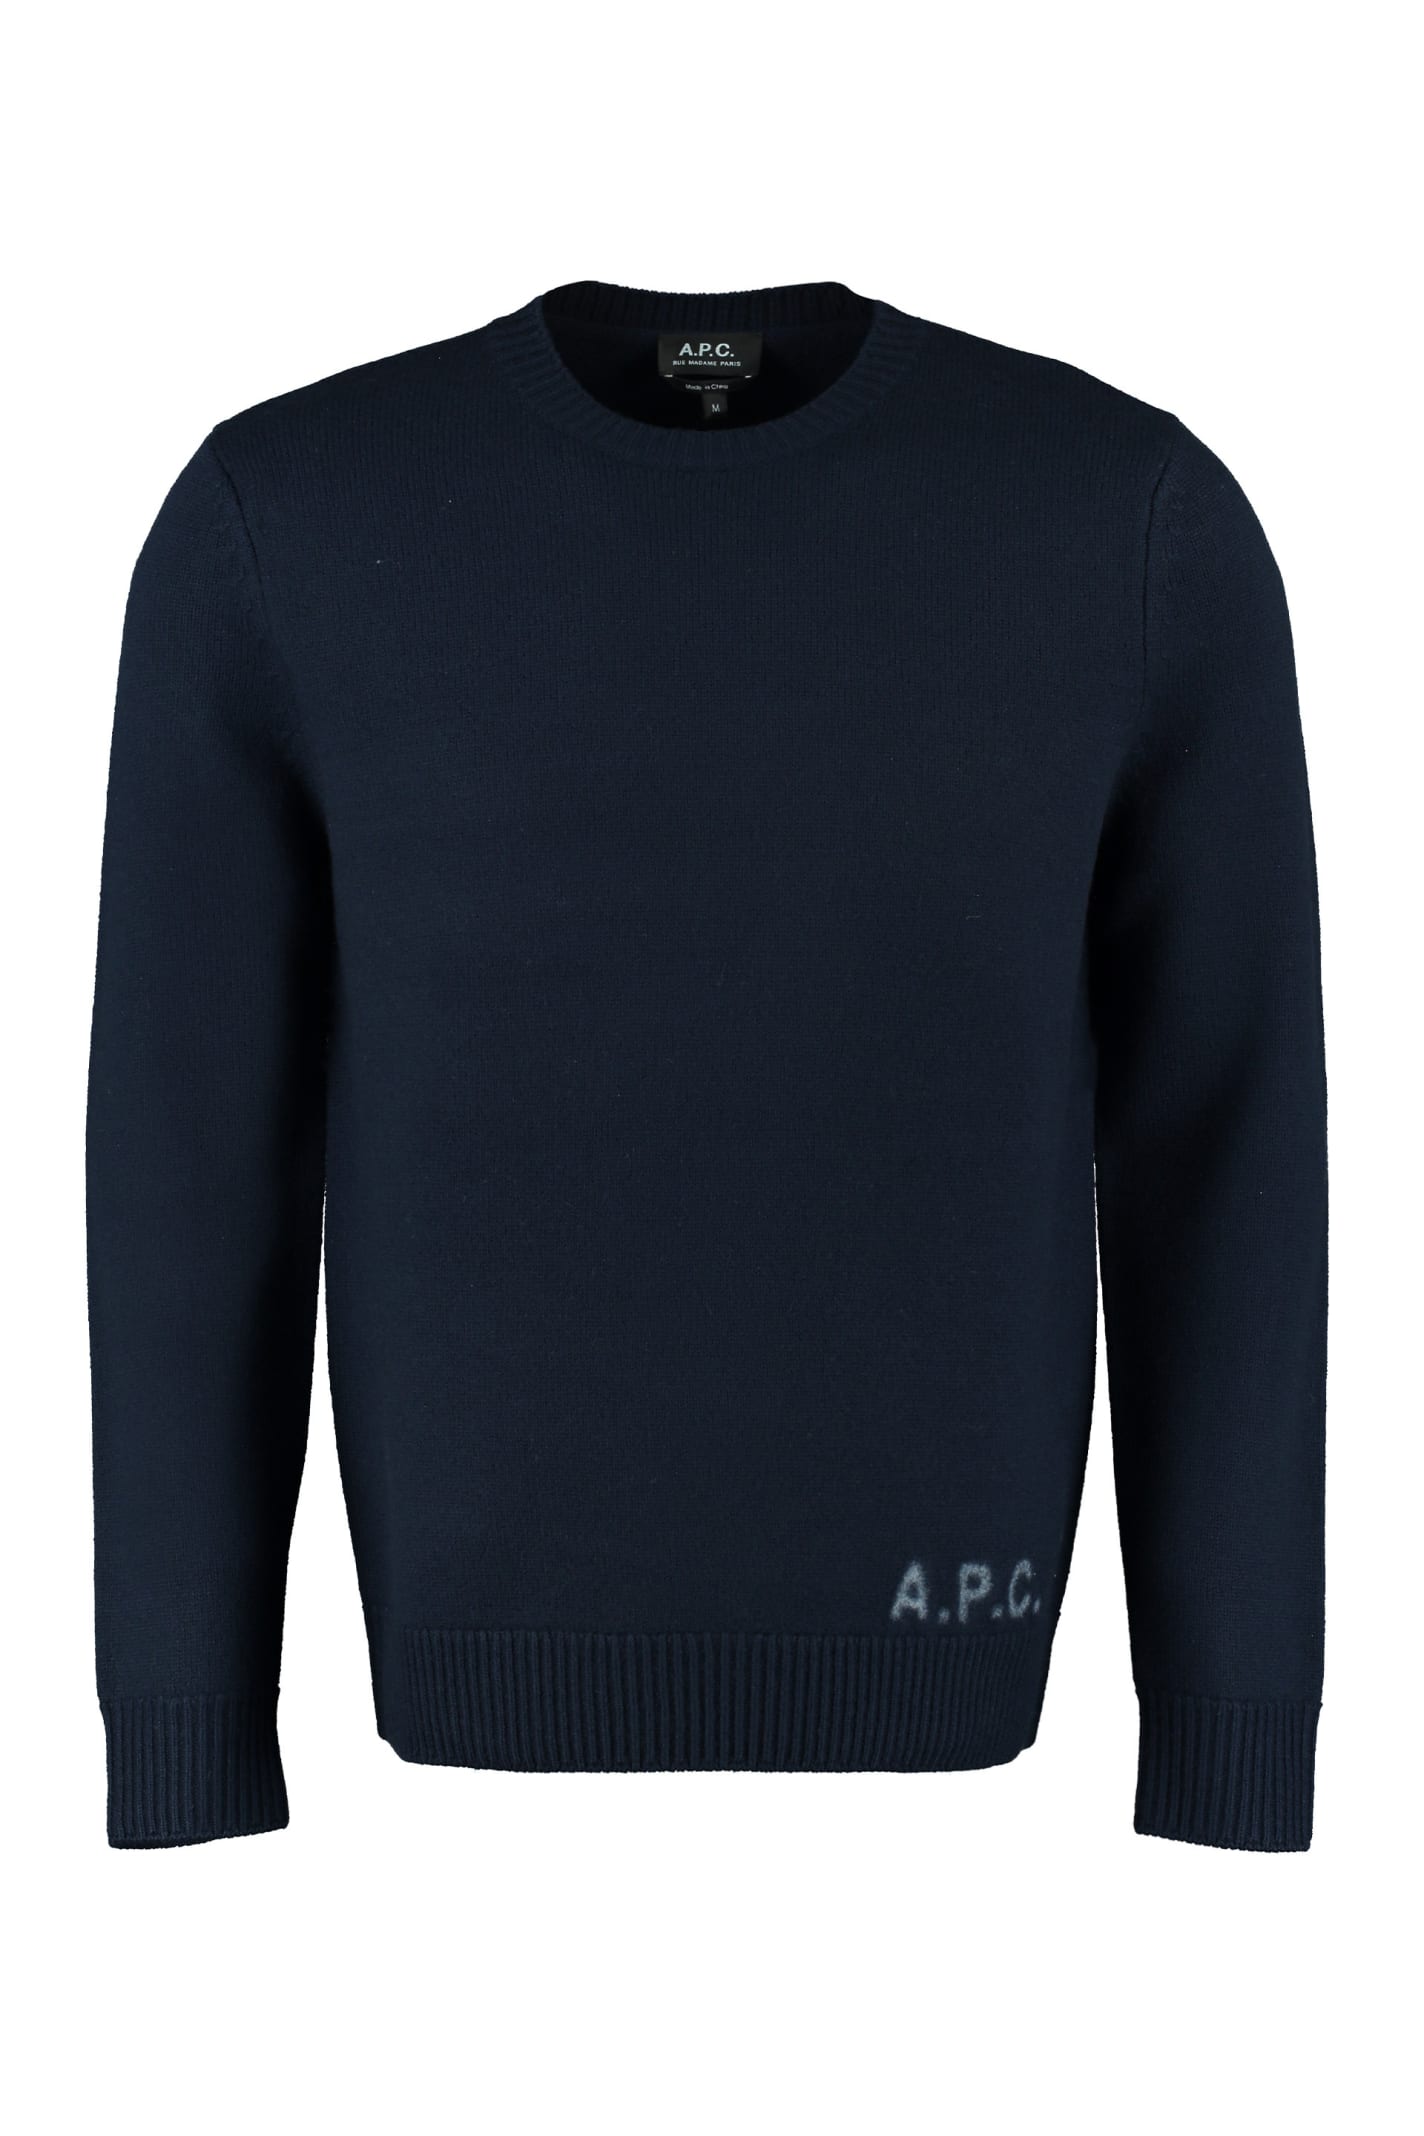 A.P.C. Crew-neck Wool Sweater